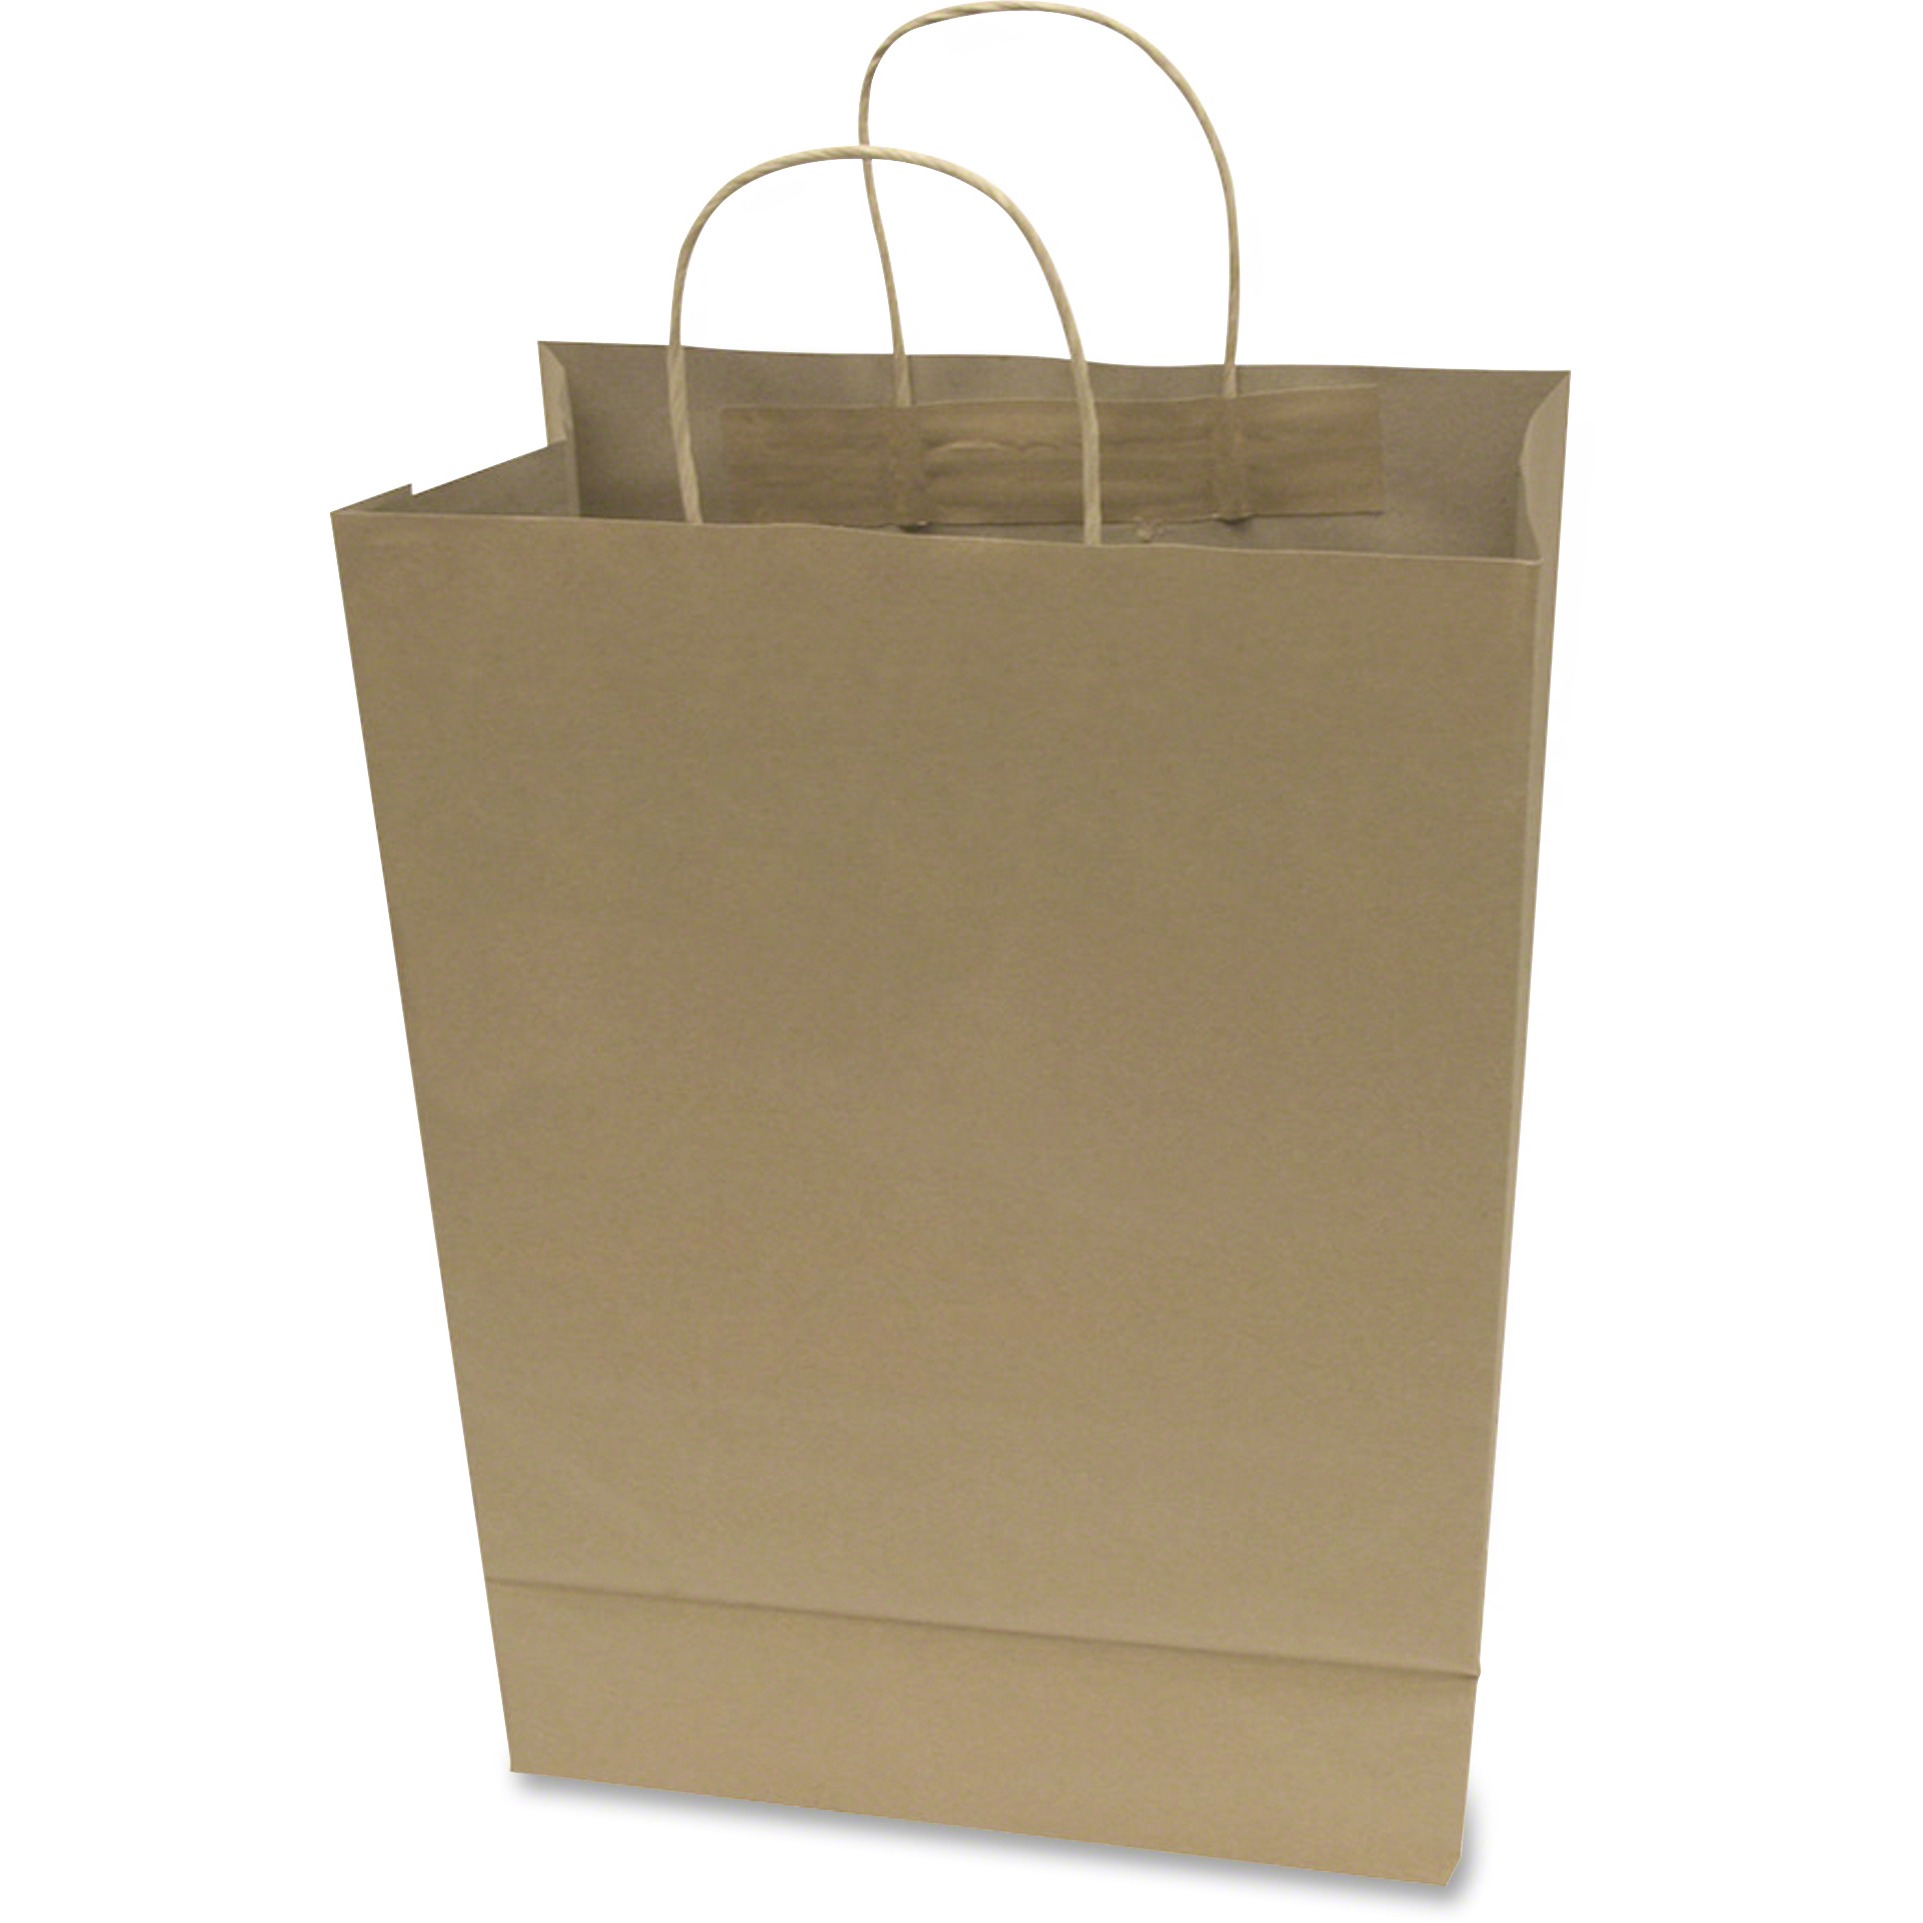 COSCO Premium Shopping Bag, Brown Kraft, 12